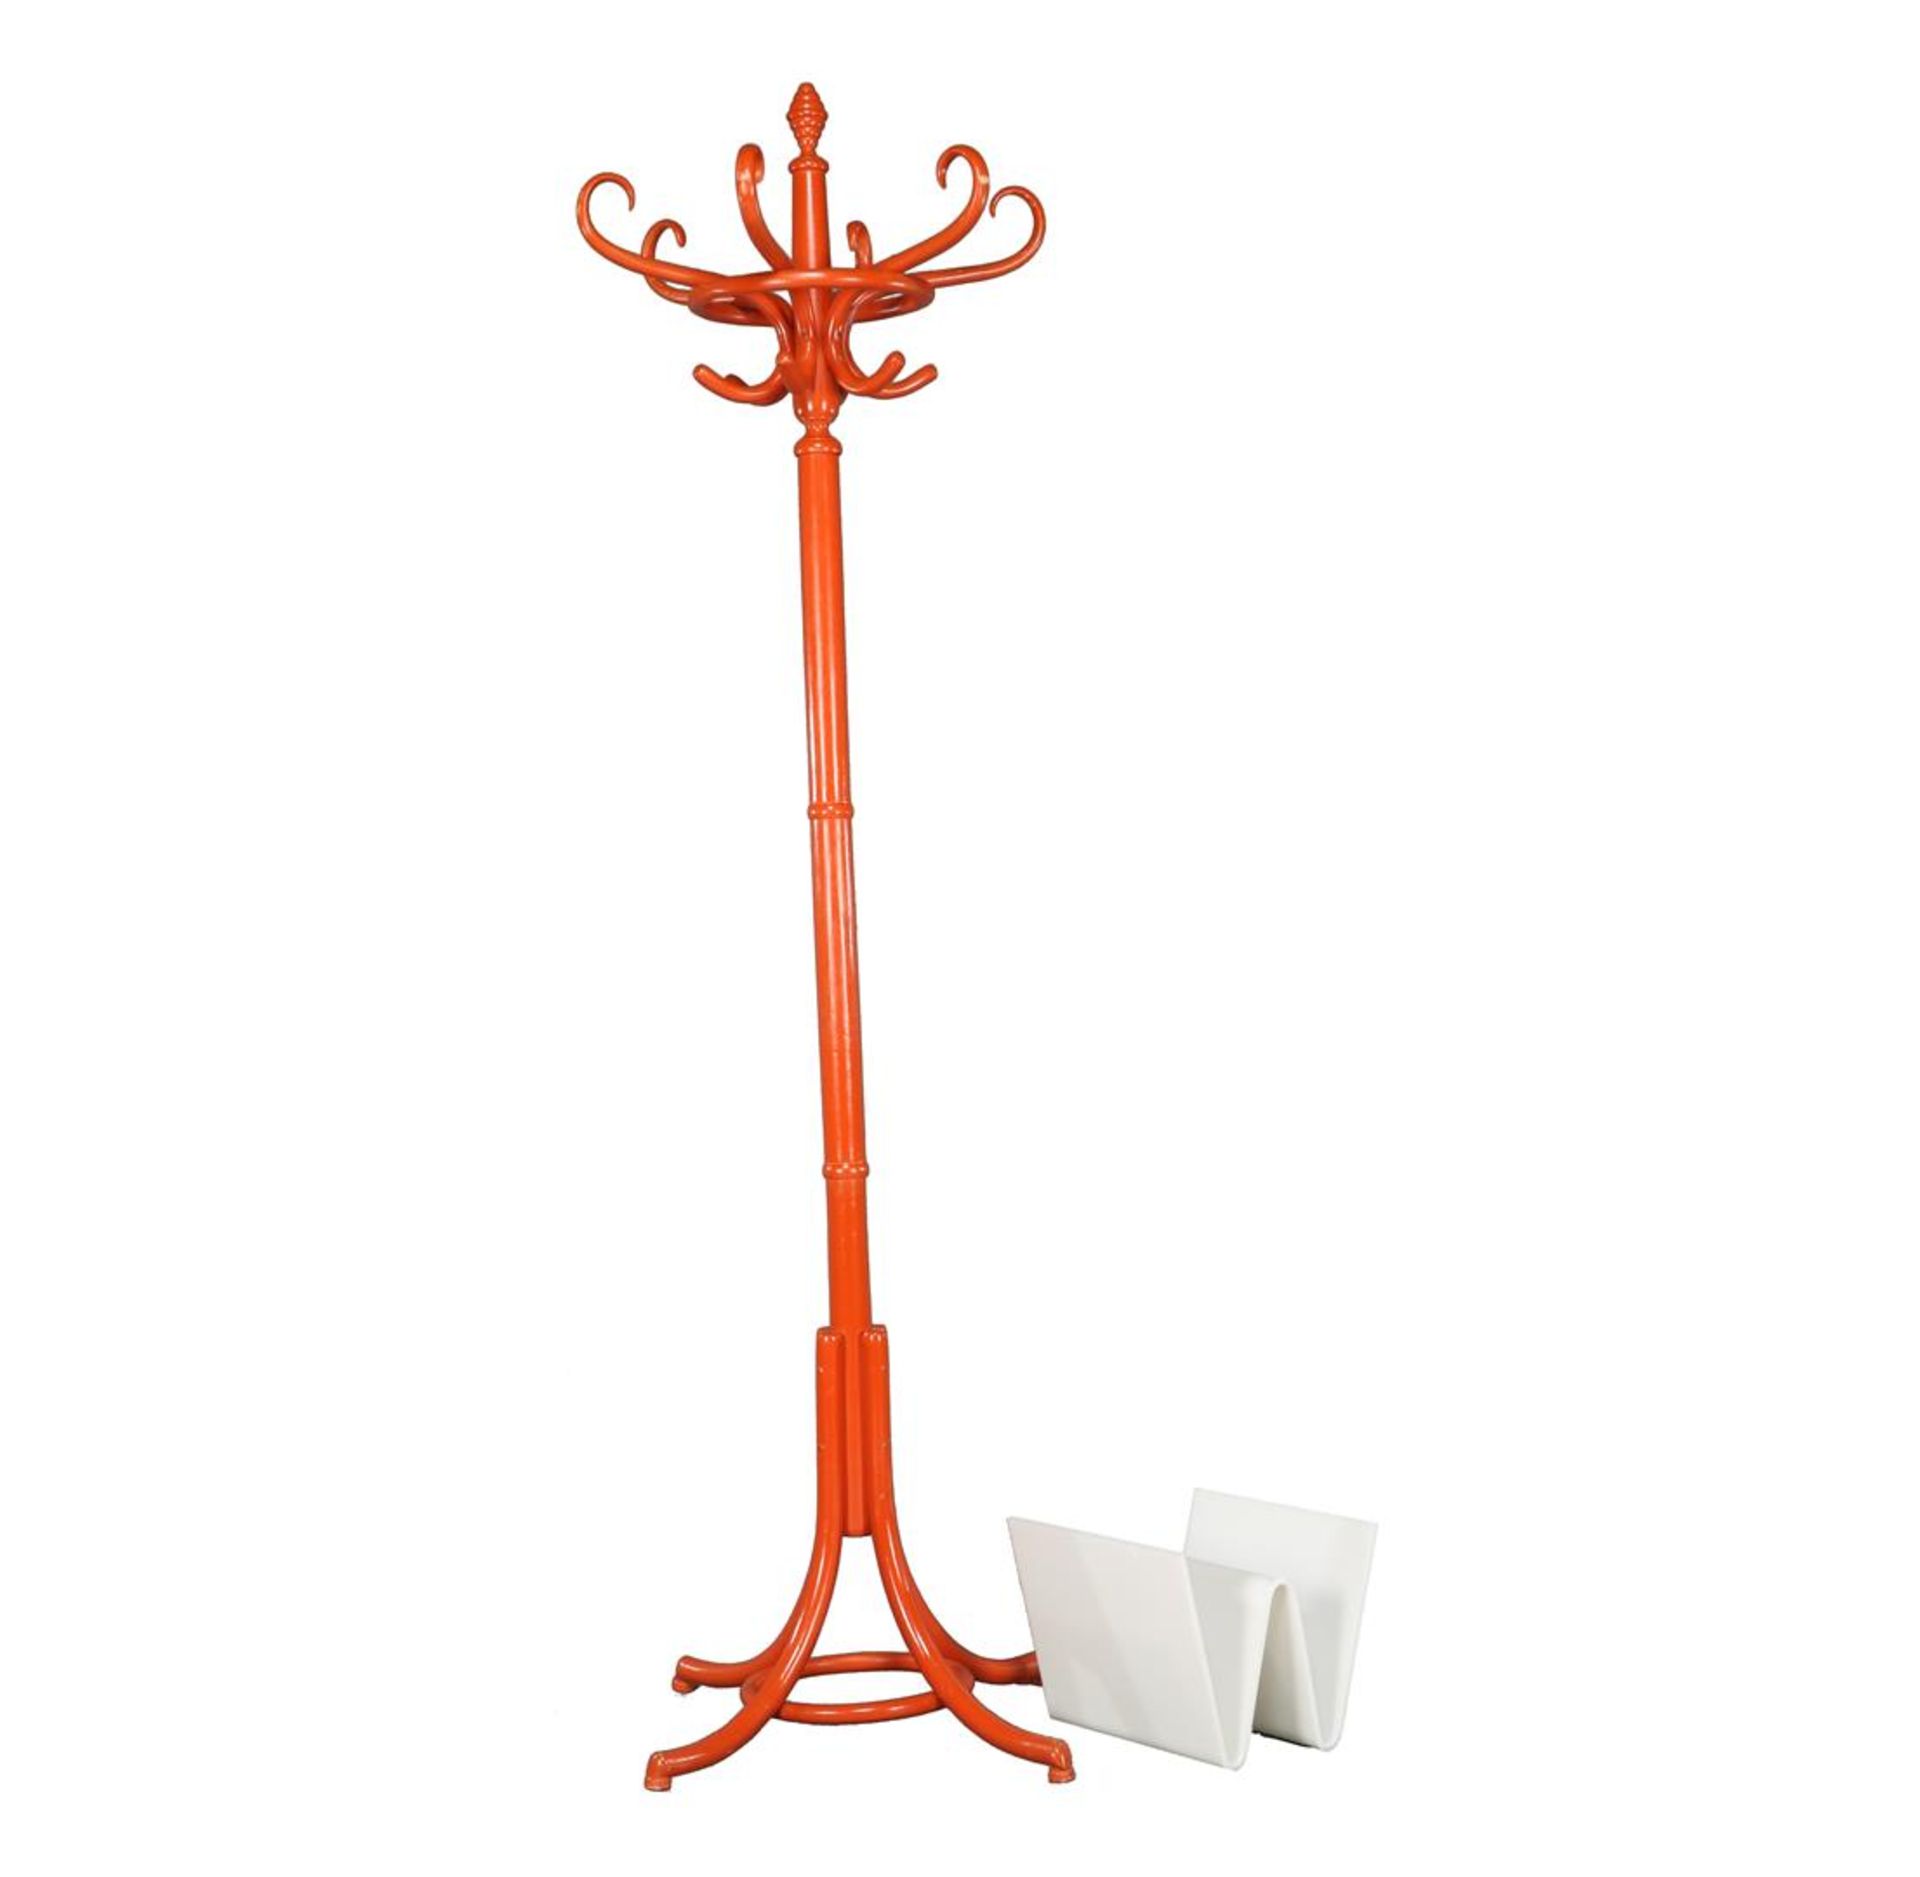 Orange lacquered standing spider coat stand 188 cm high and white plexiglass magazine rack, m-